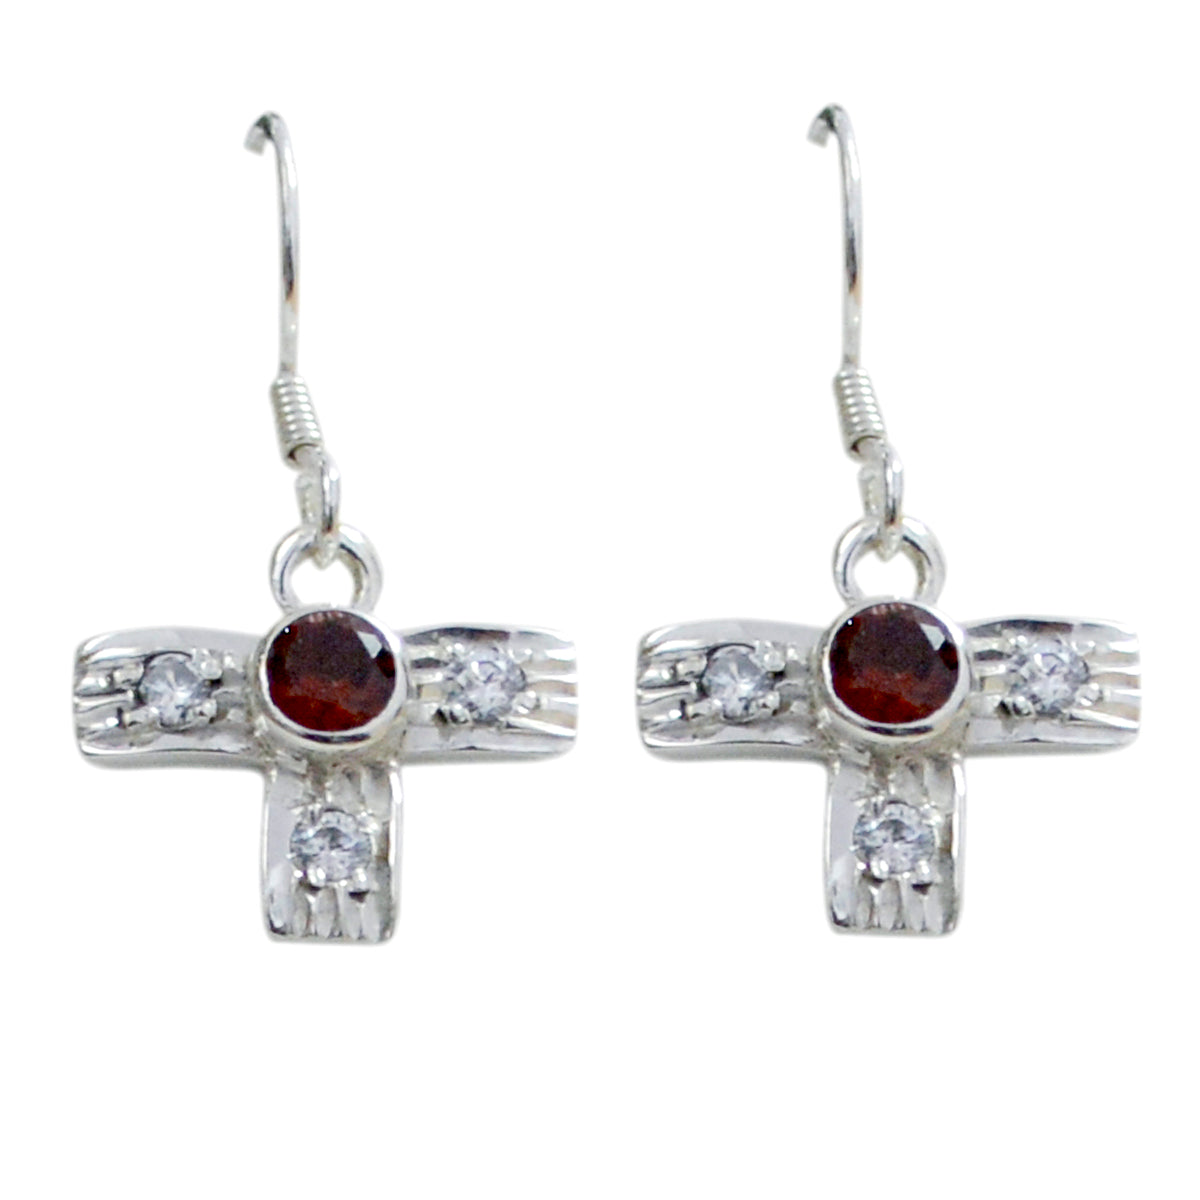 Riyo Good Gemstones round Faceted Red Garnet Silver Earring gift for teachers day